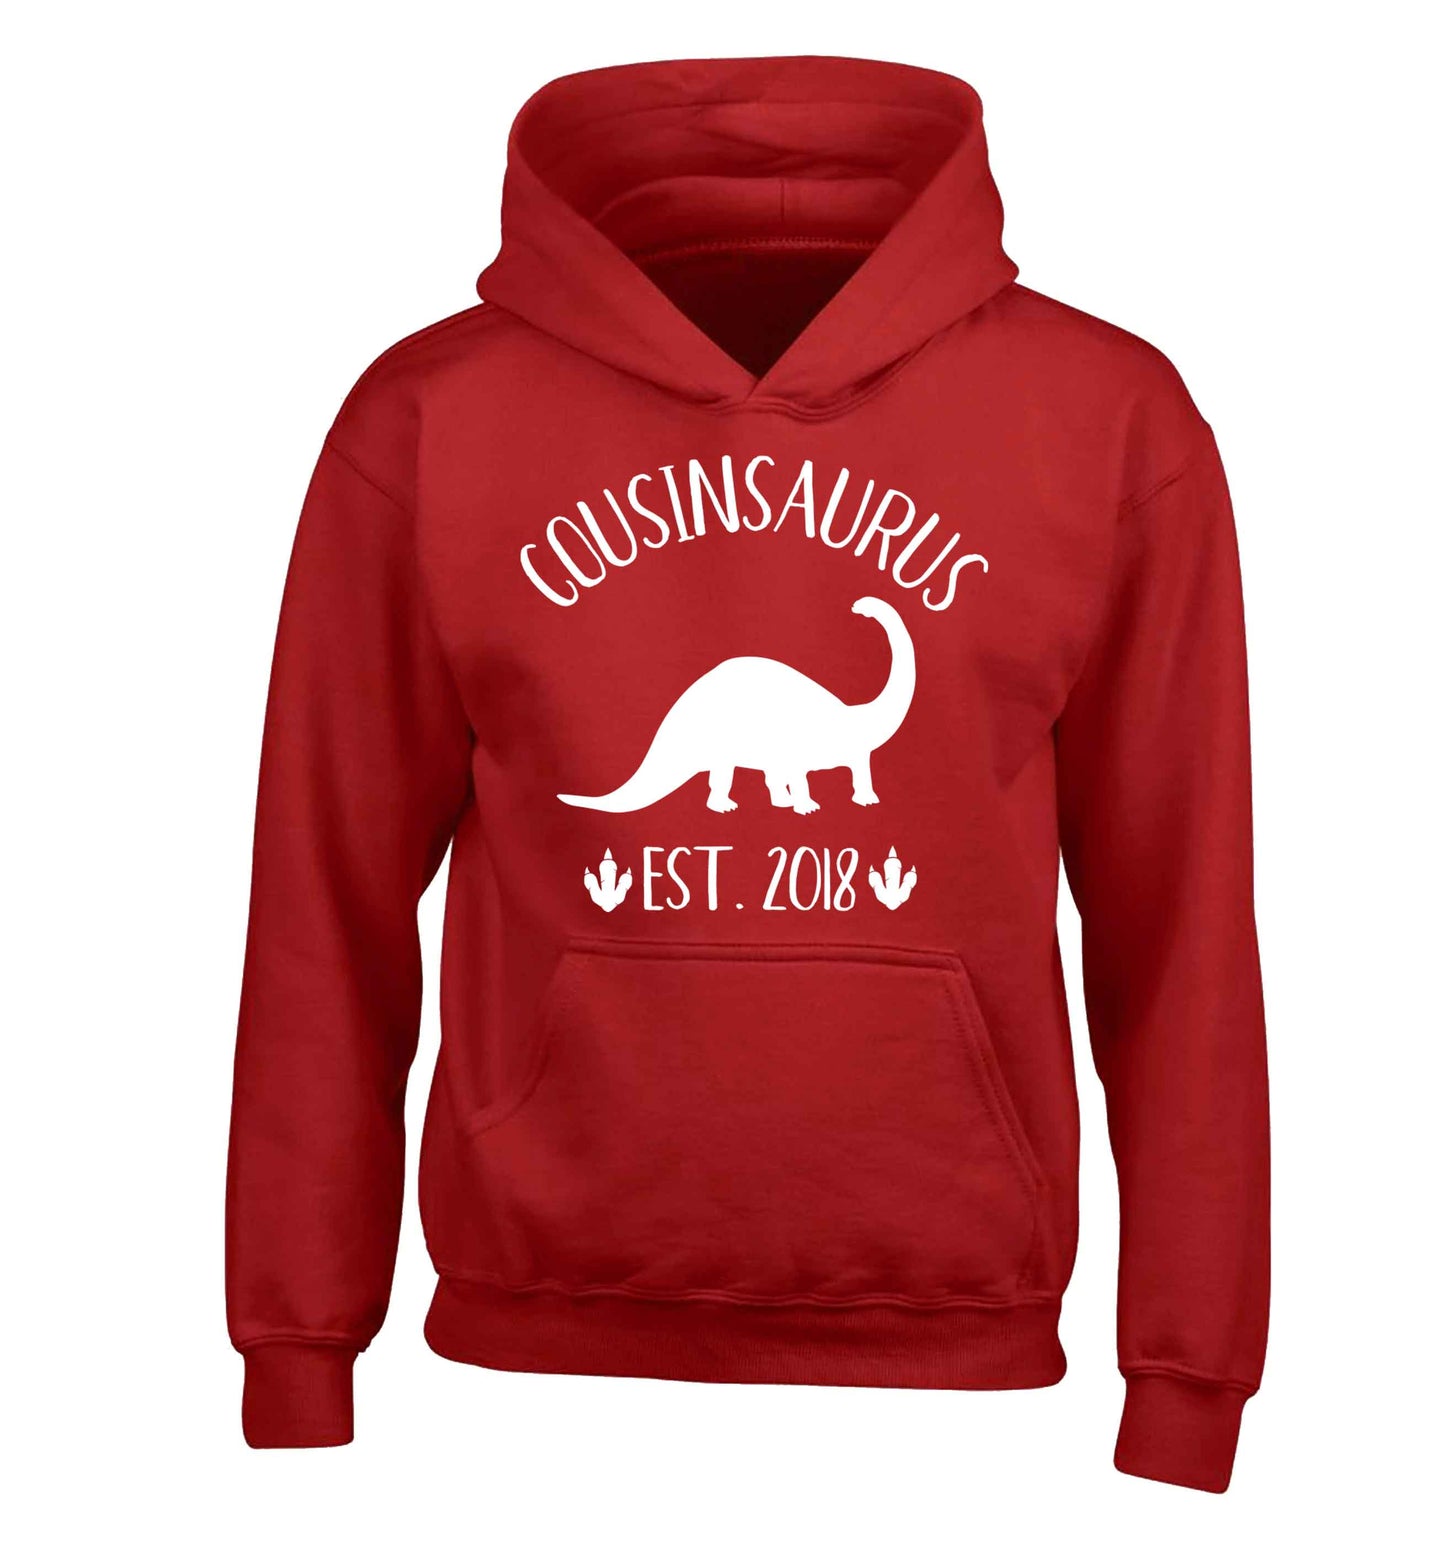 Personalised cousinsaurus since (custom date) children's red hoodie 12-13 Years